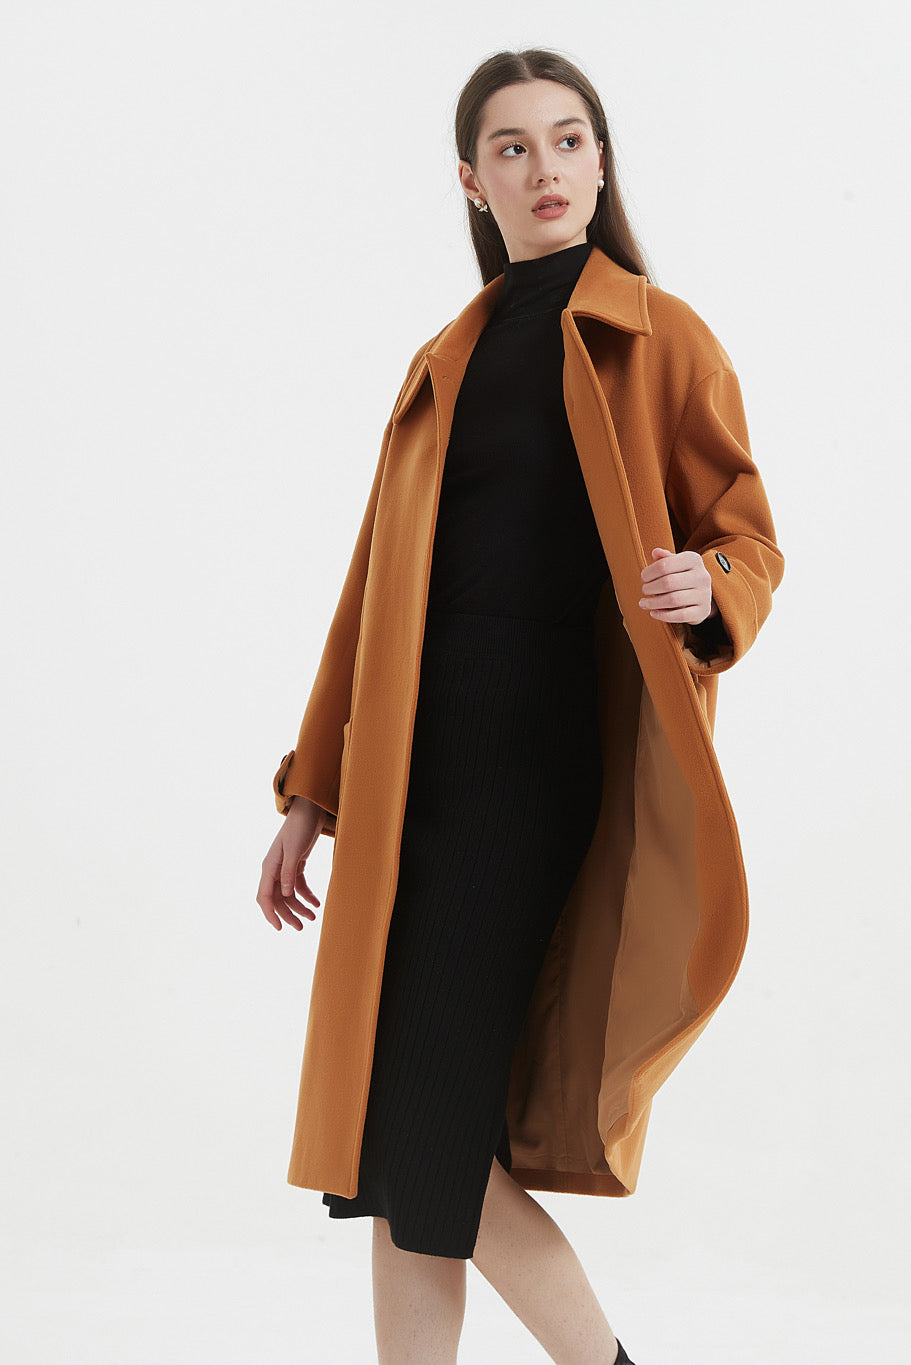 SKYE Shop Chic Modern Elegant Timeless Women Clothing French Parisian Minimalist Annabelle Long Wool Coat